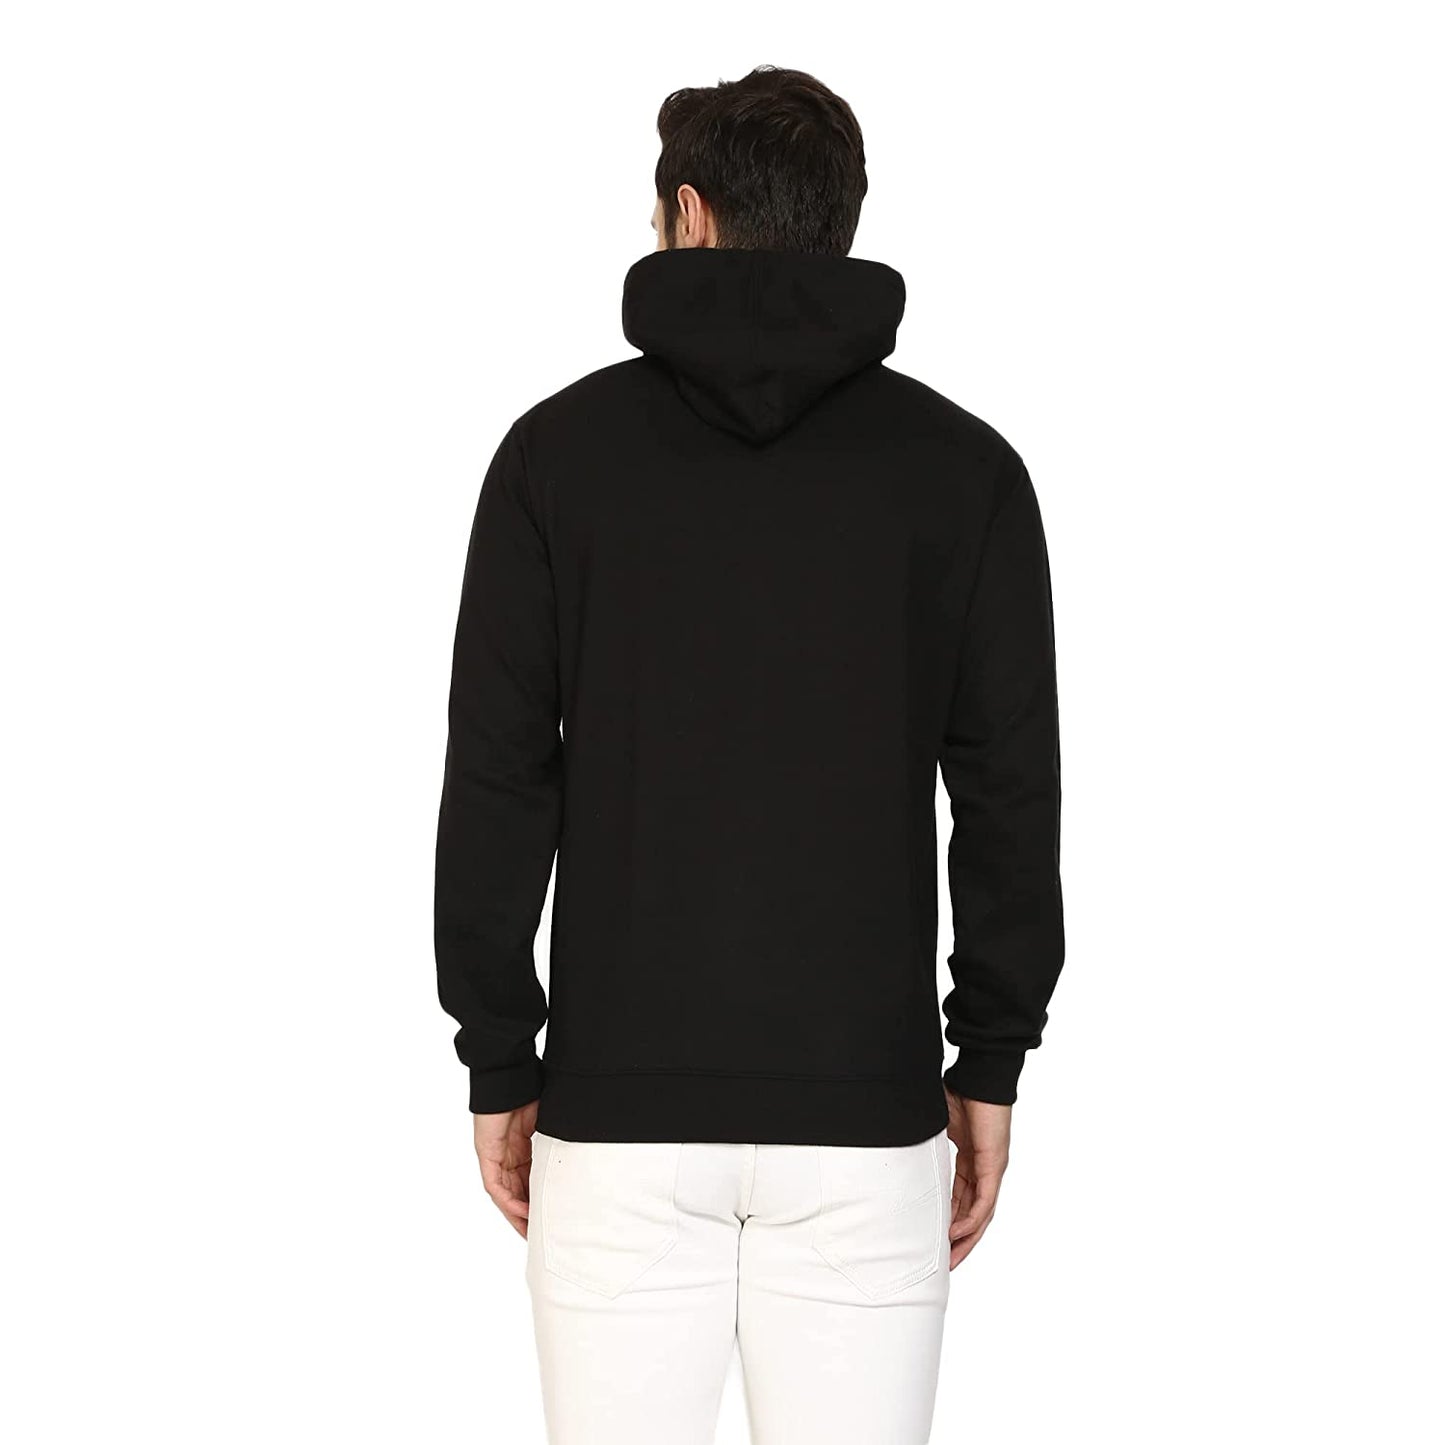 Round Neck Black Color Cotton Full Sleeve Premium Hoodie for Men